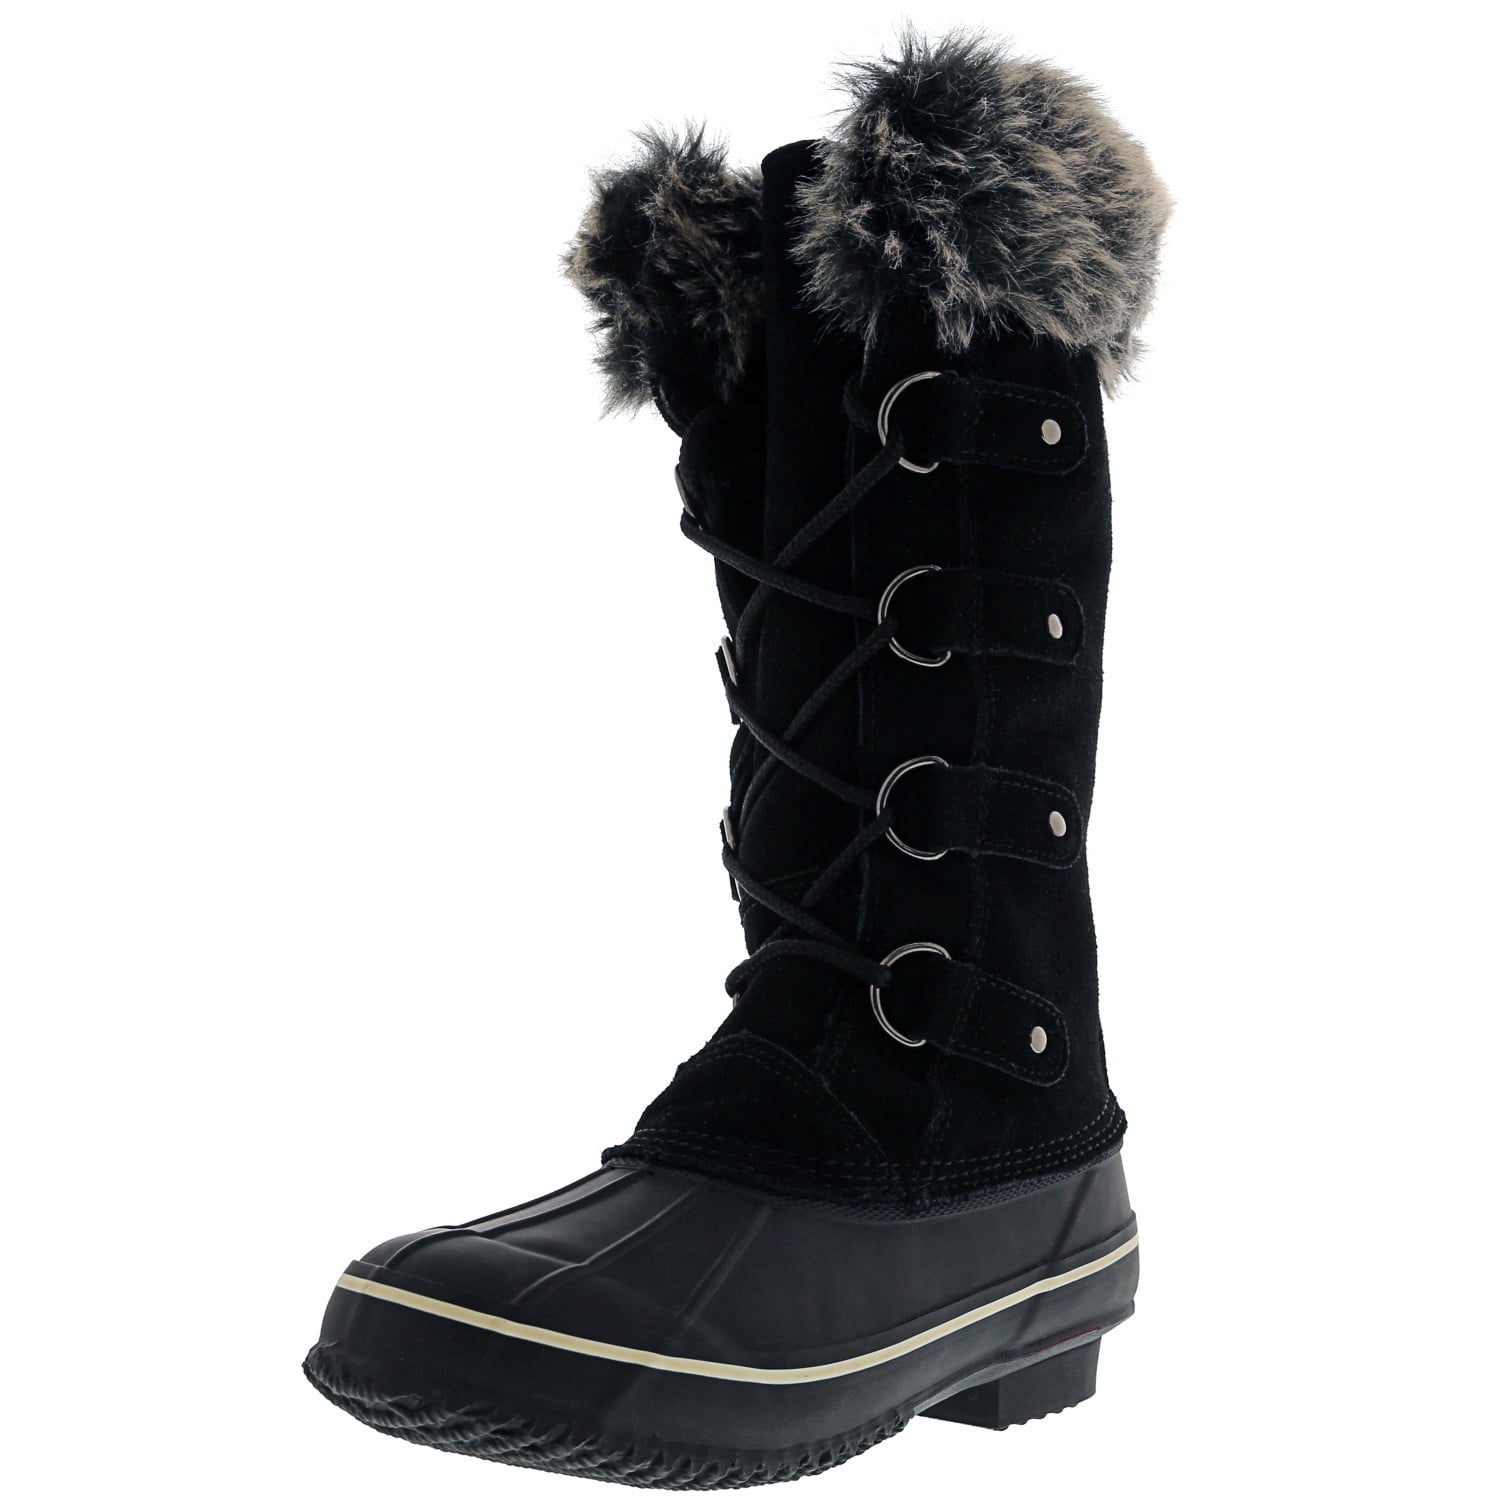 tall winter boots